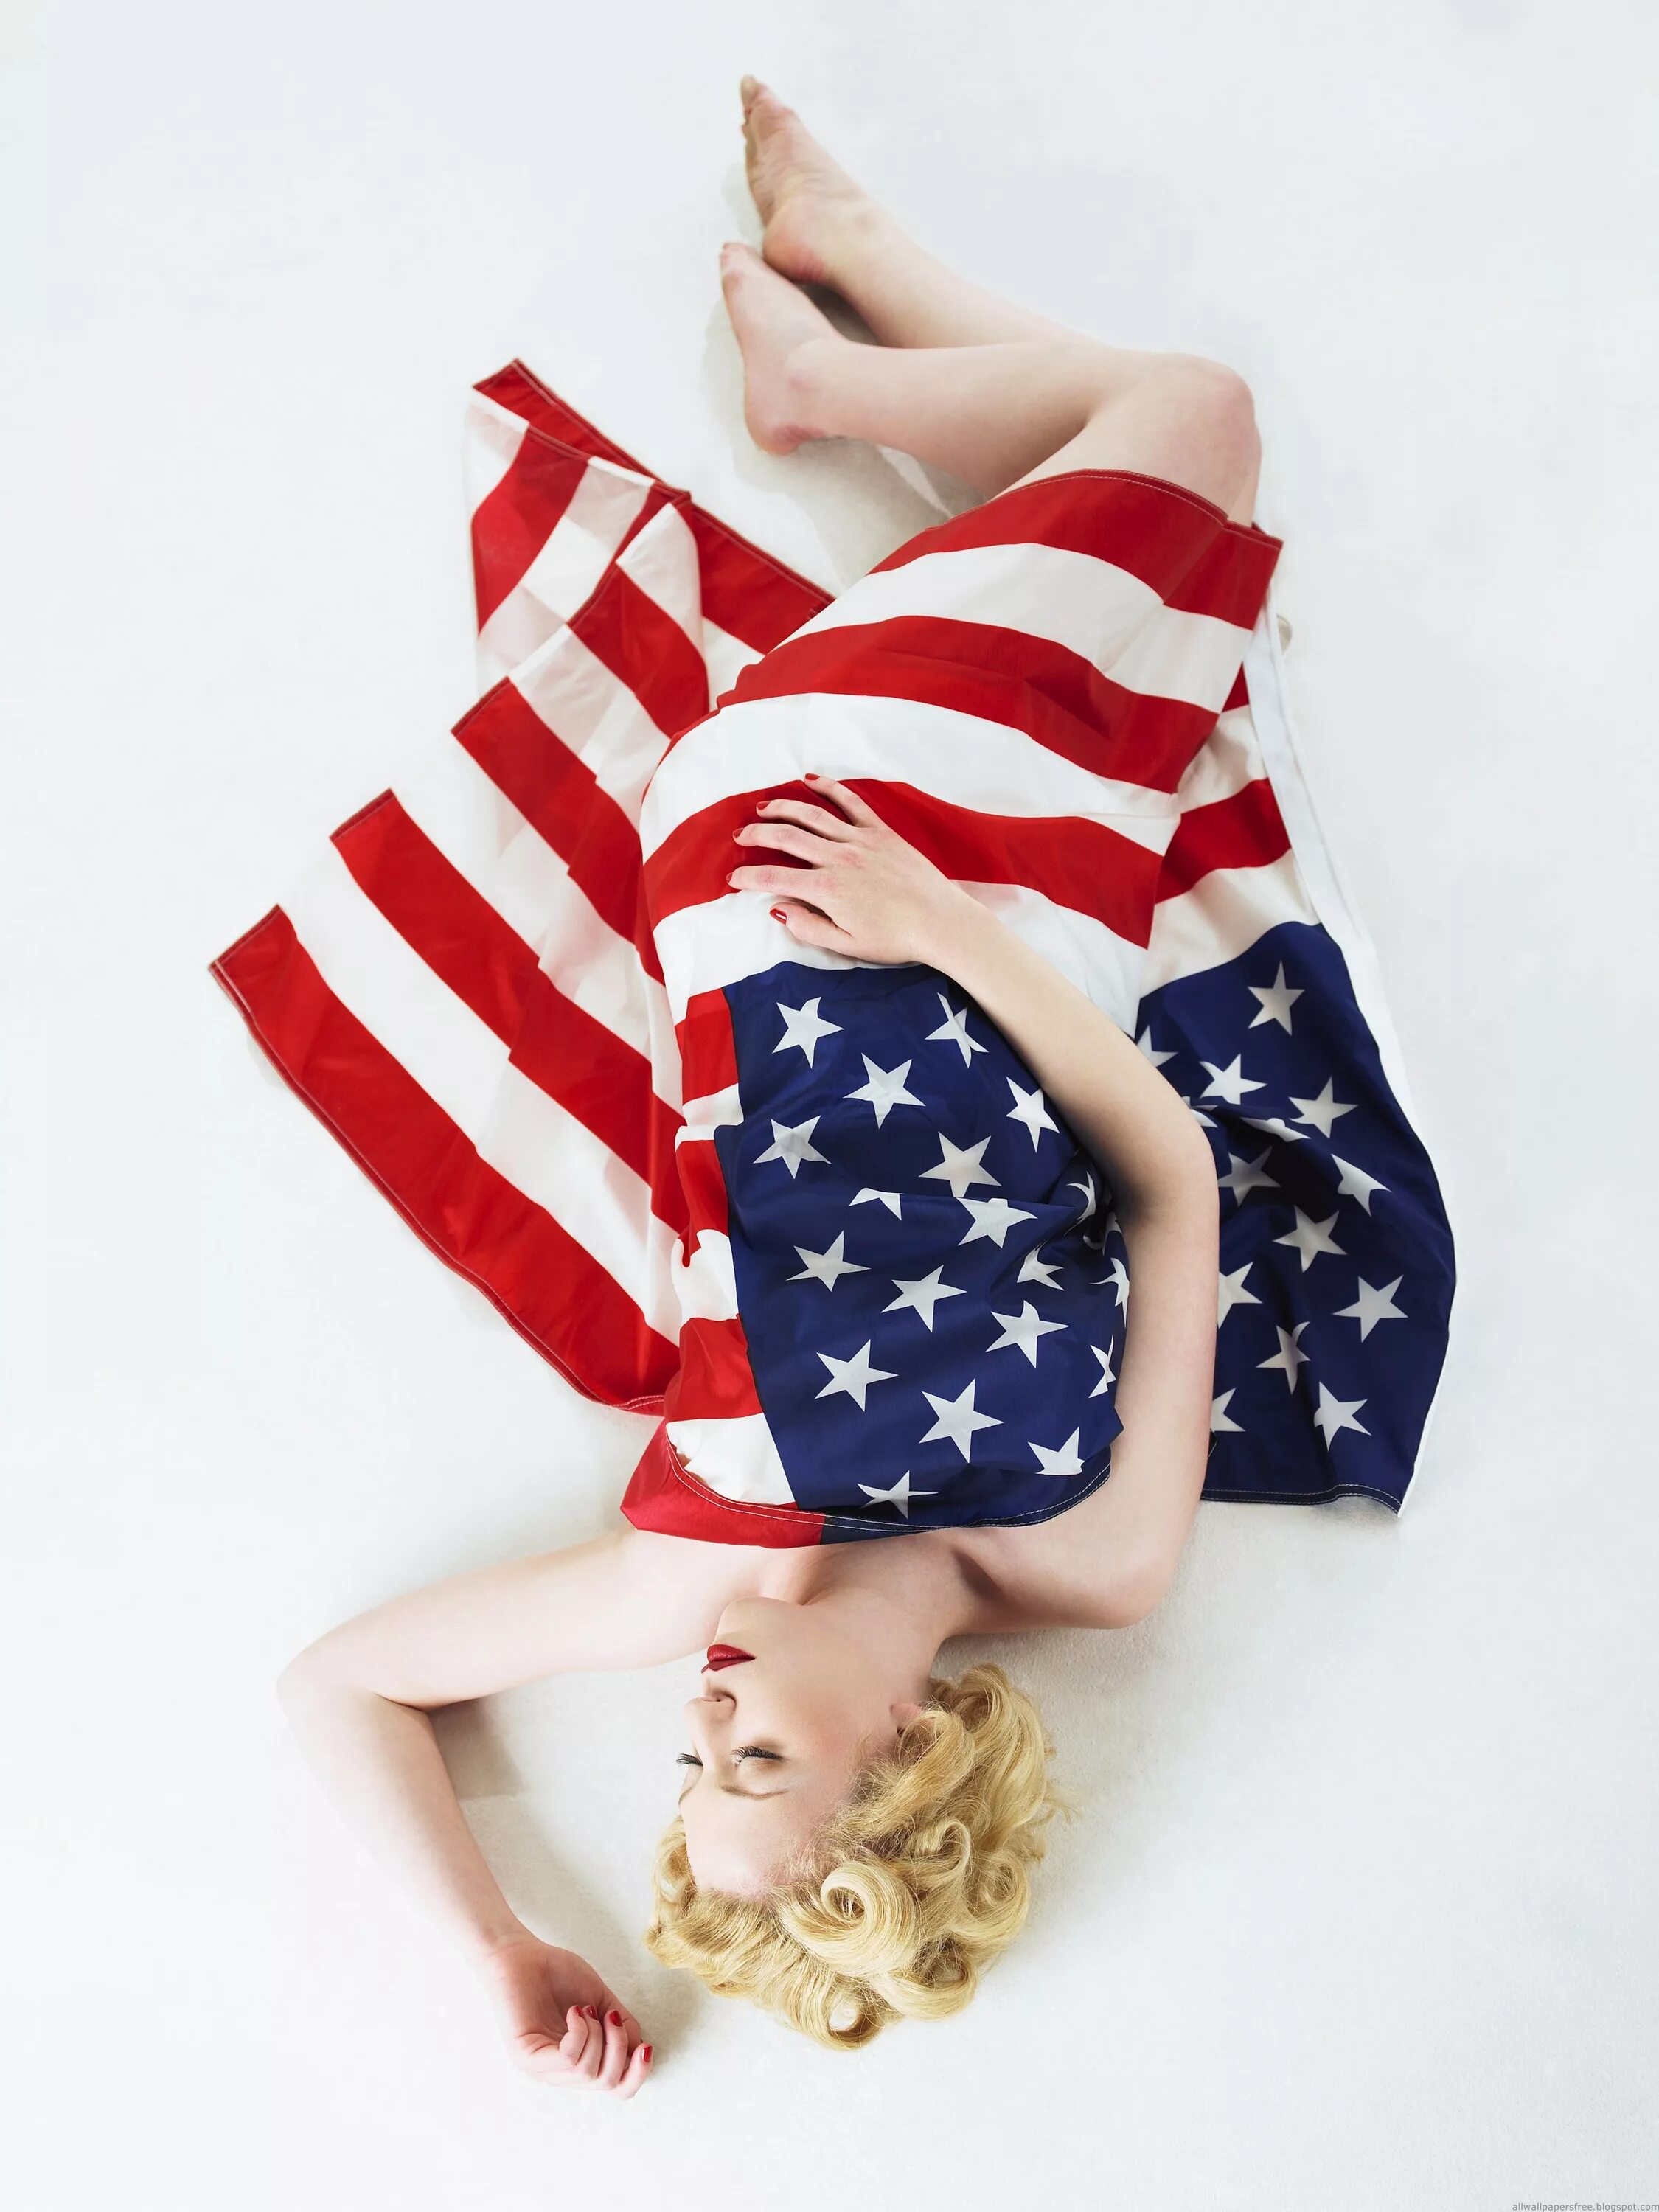 Usa герл. Девушка с флагом. США девушки. Девушка с американским флагом. Баба с флагом США.